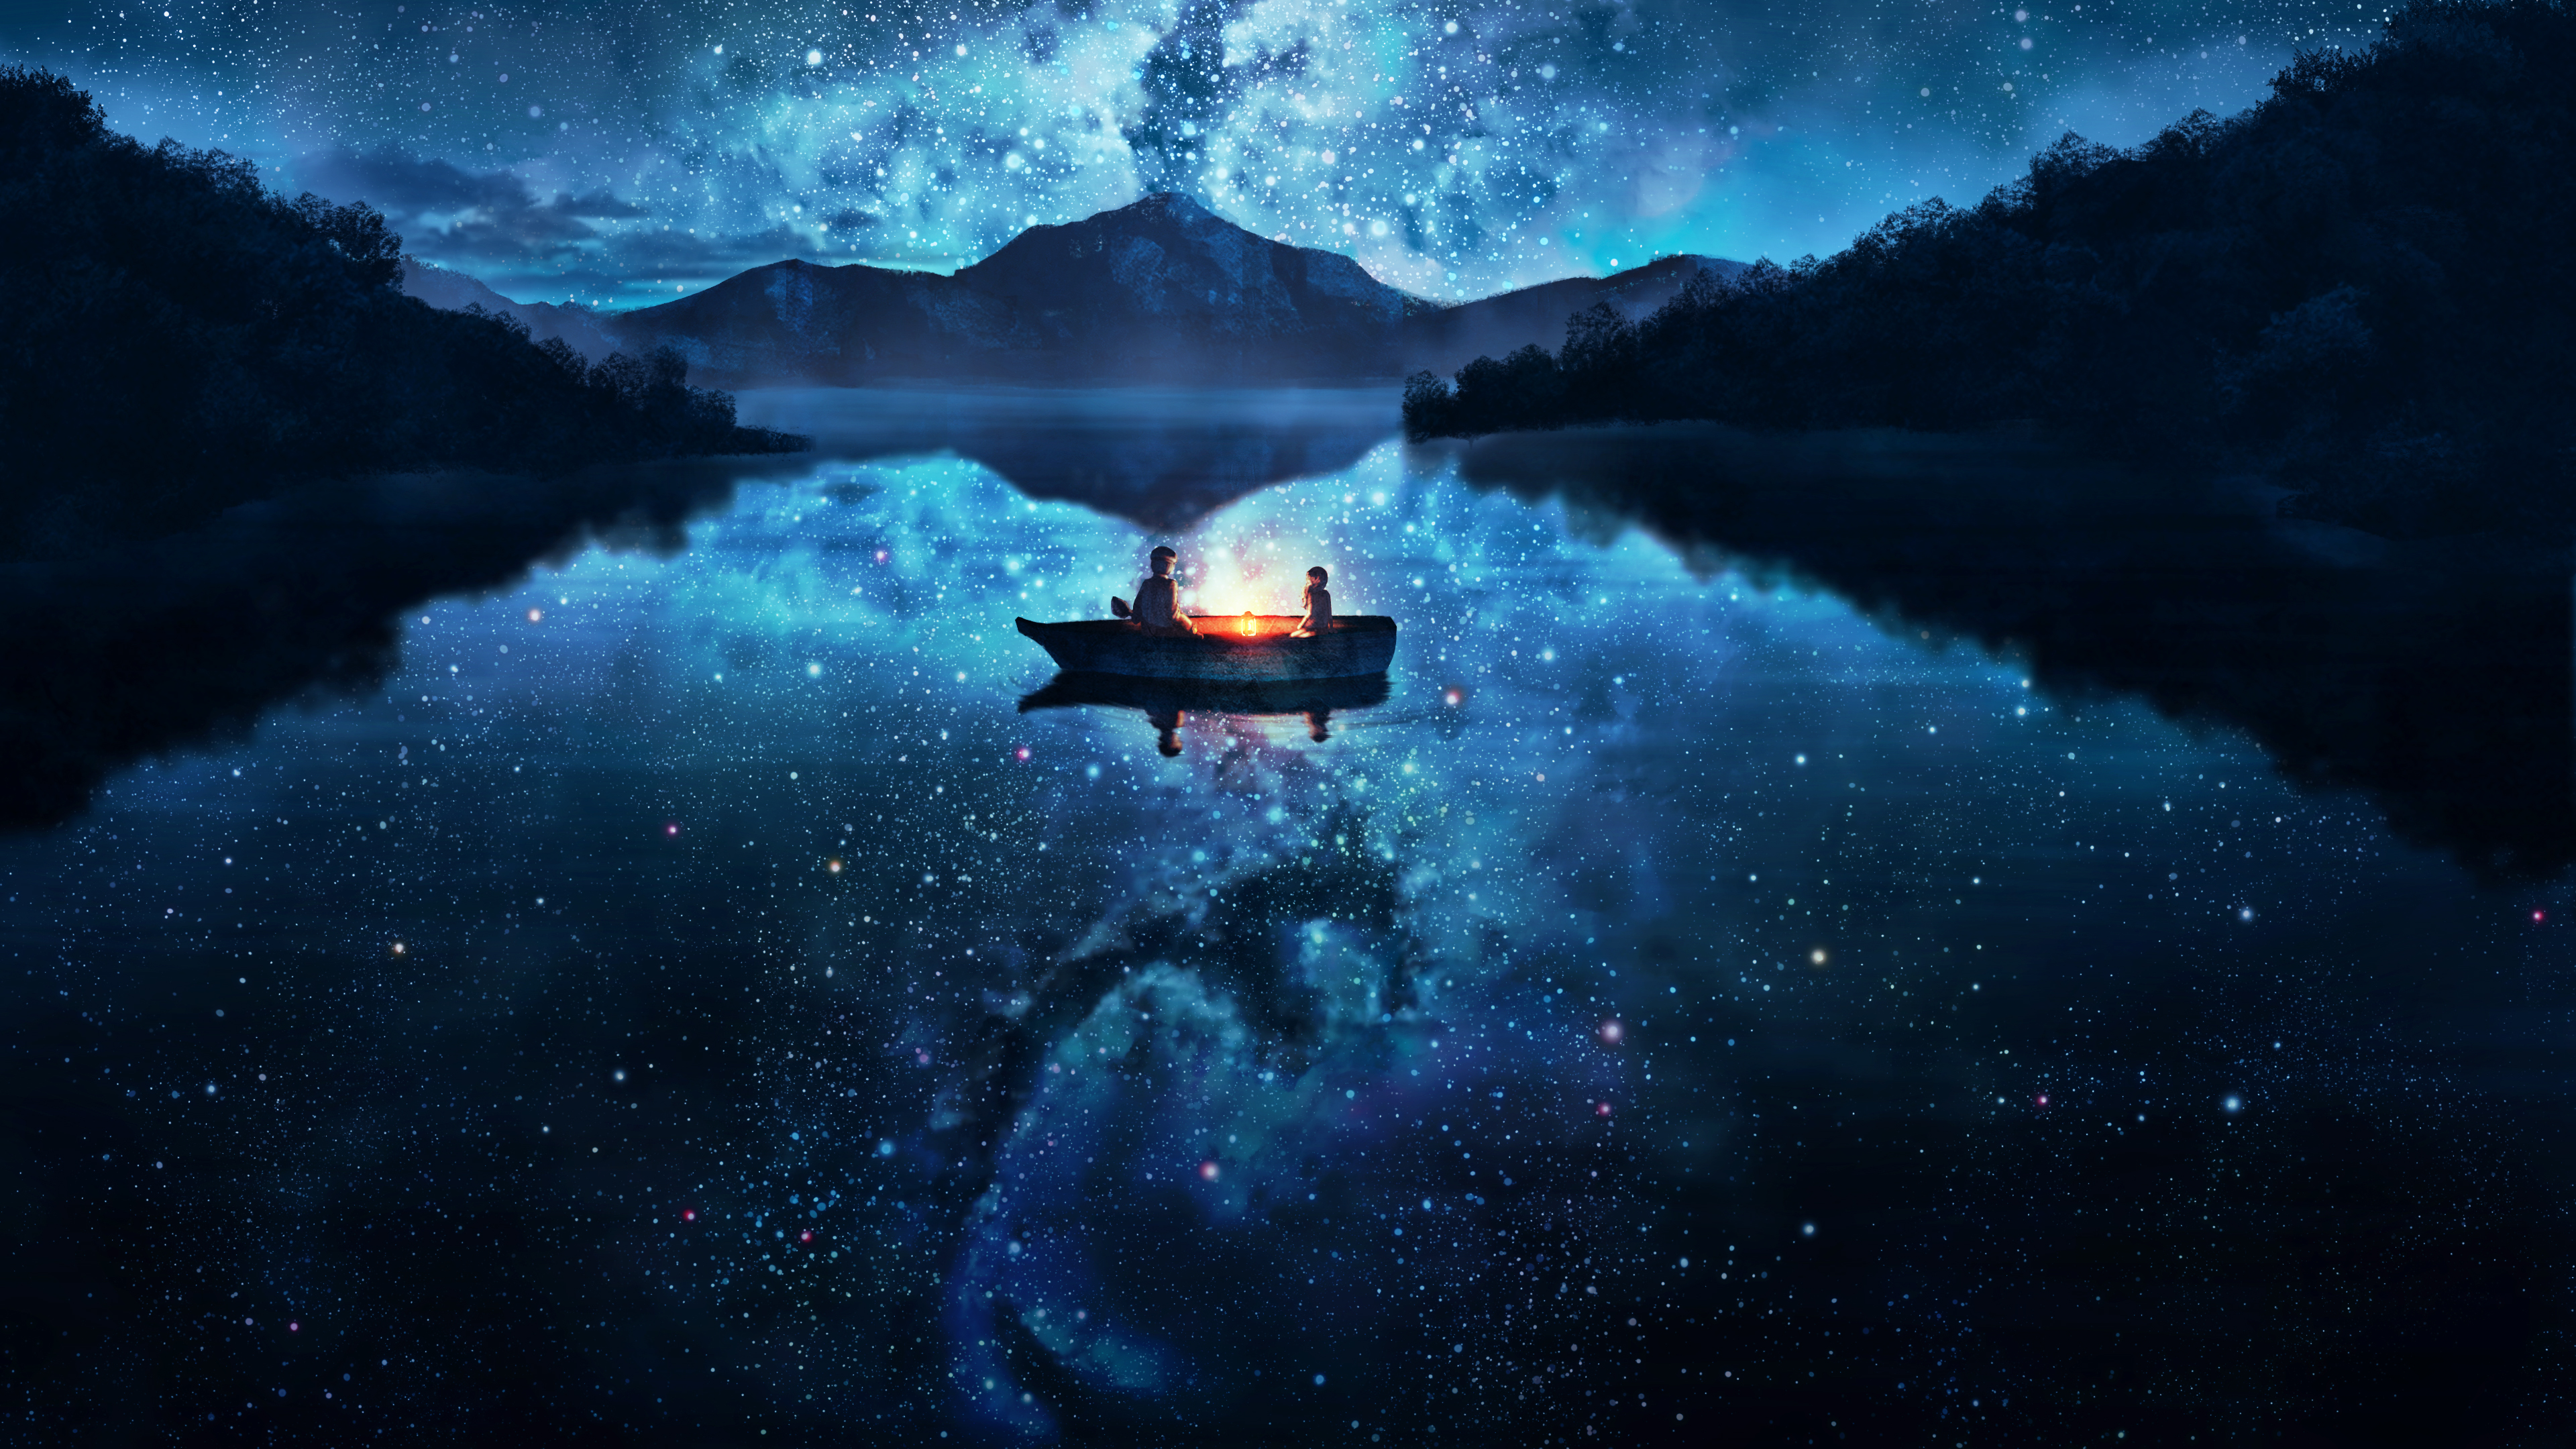 night, lake, anime, reflection, starry sky, boat, scenic